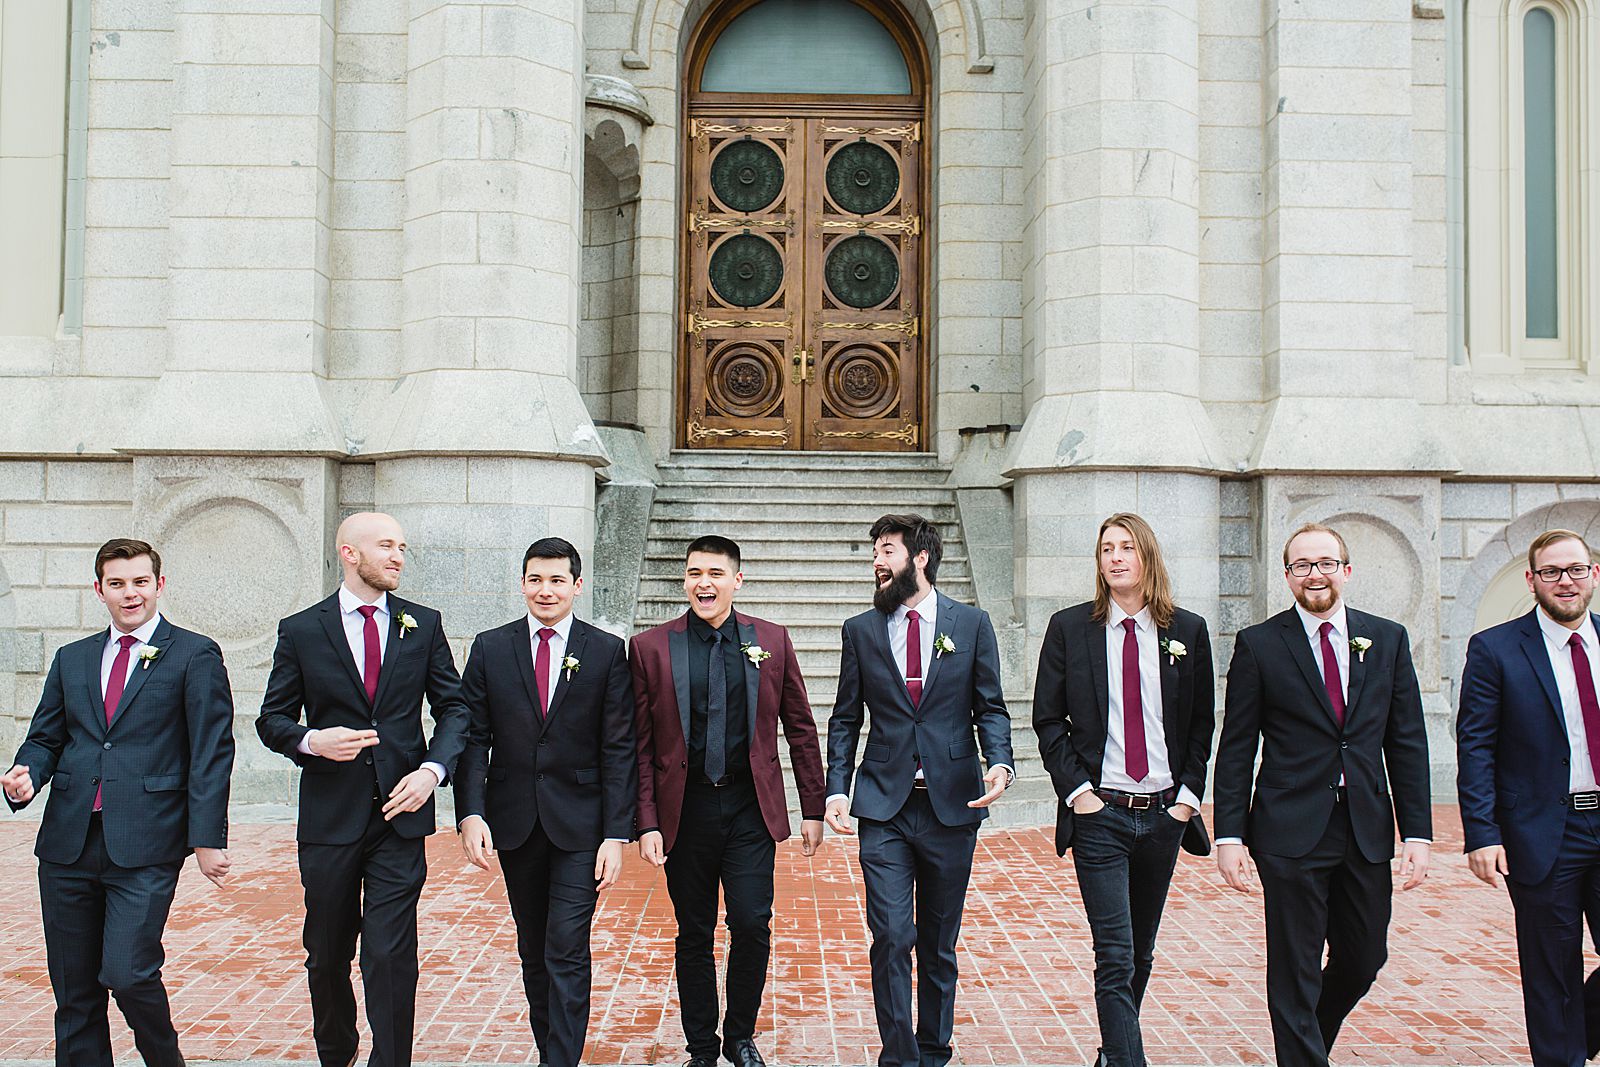 Salt Lake Temple Winter Wedding | Groomsmen